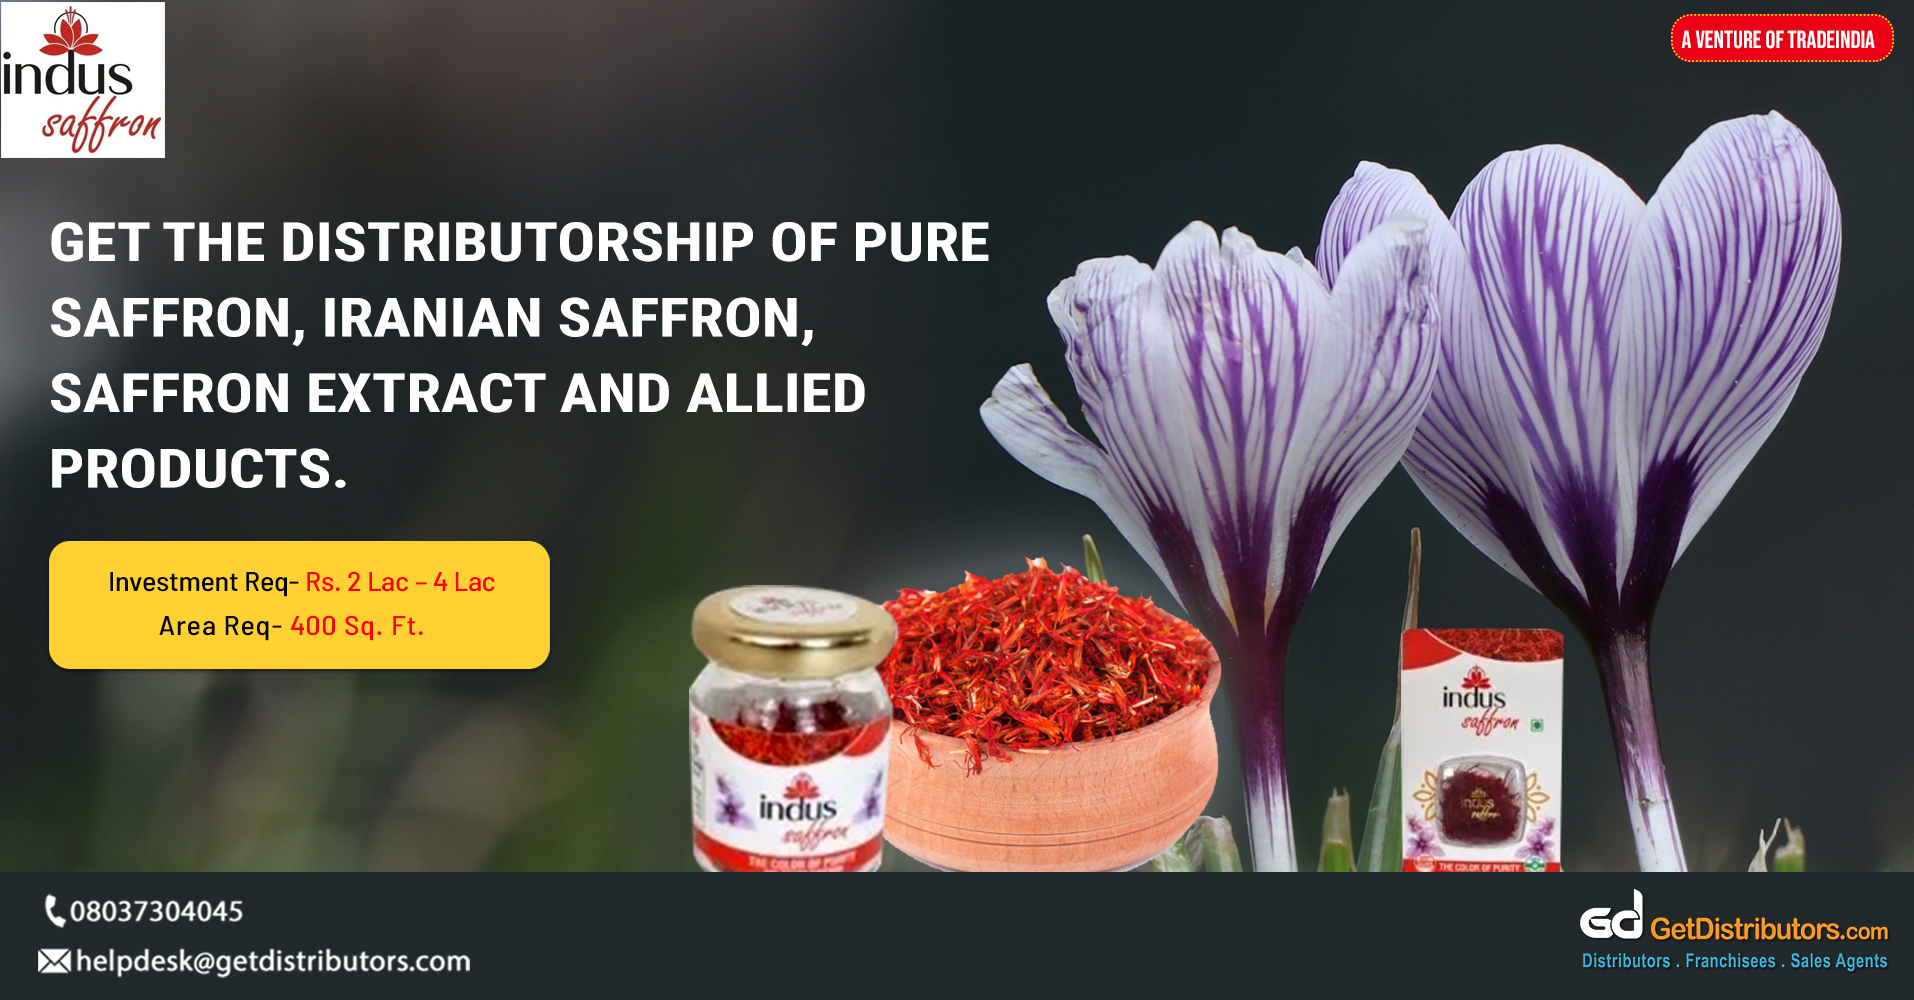 A wide range of saffron for distributors